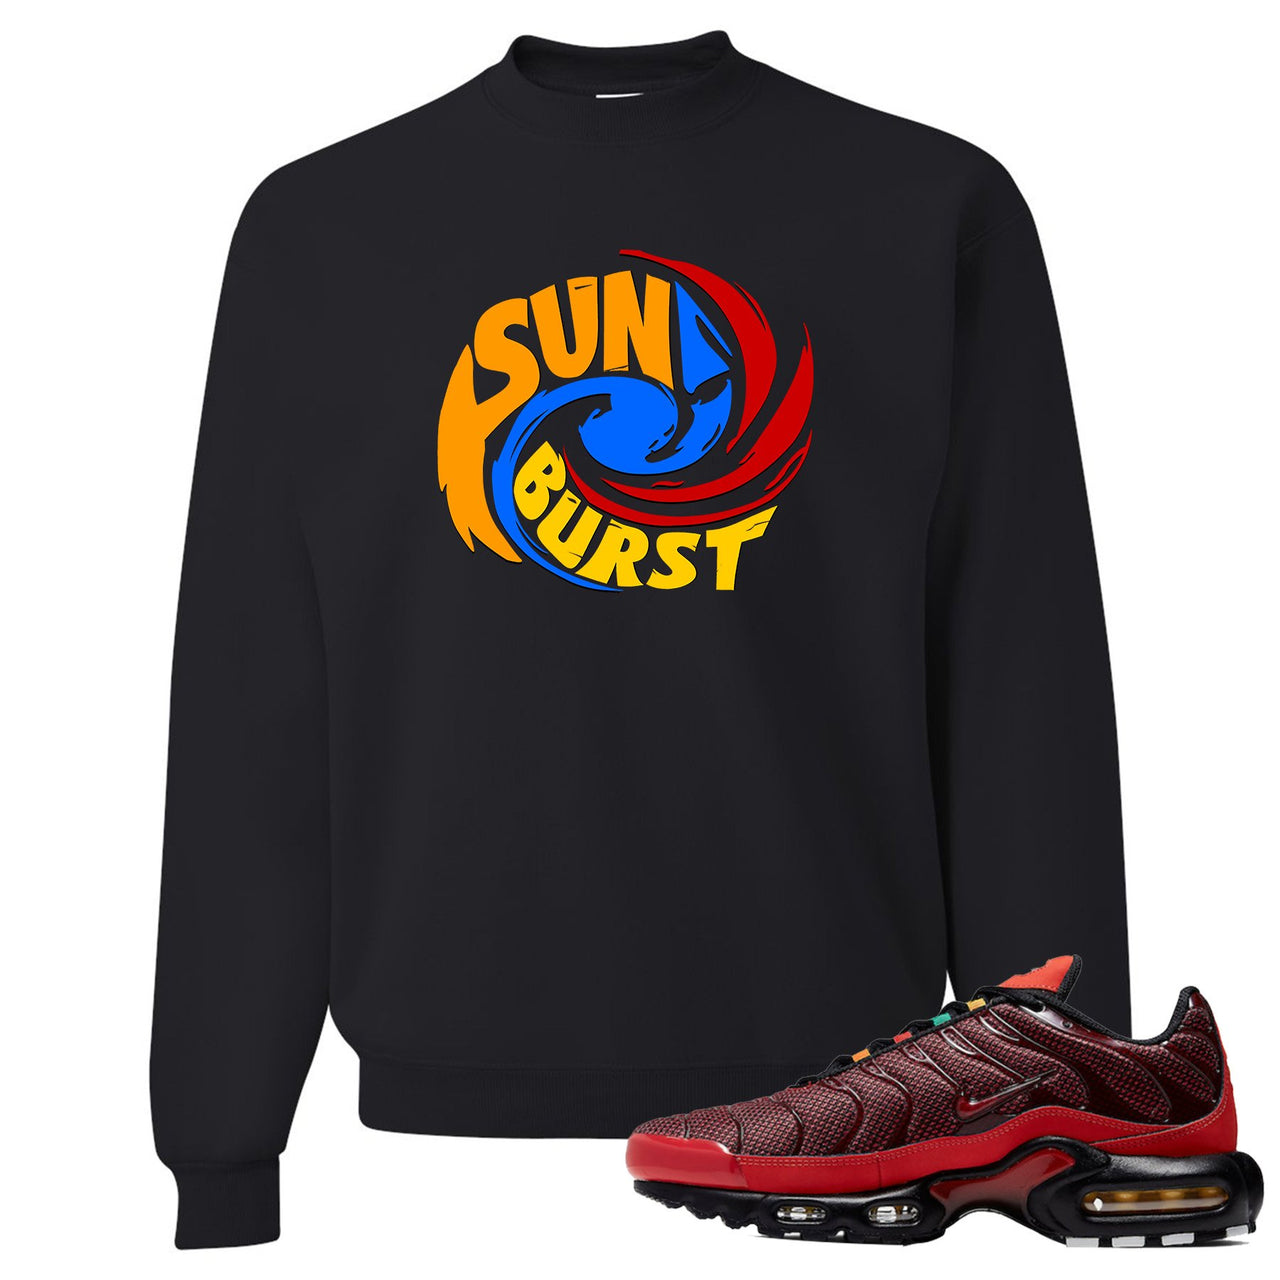 printed on the front of the air max plus sunburst sneaker matching black crewneck sweatshirt is the sunburst hurricane logo